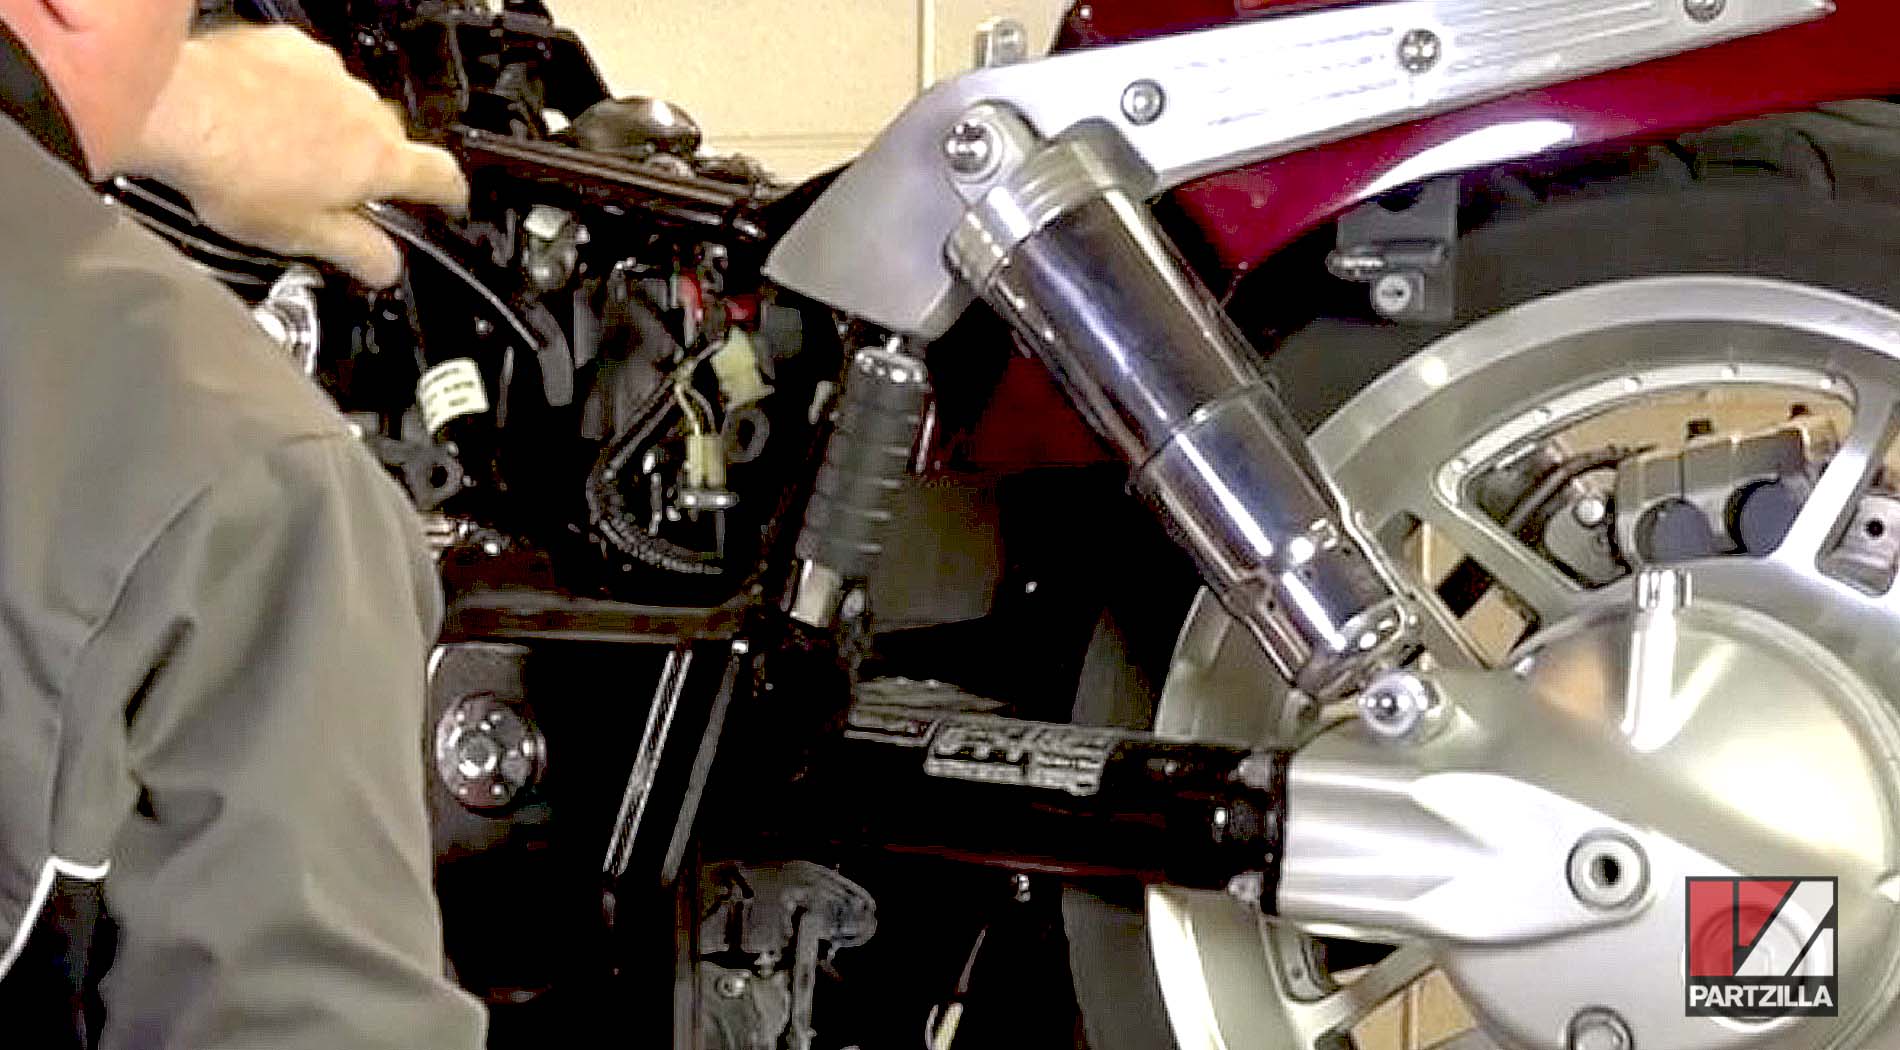 How to change Honda VTX motorcycle fuel line